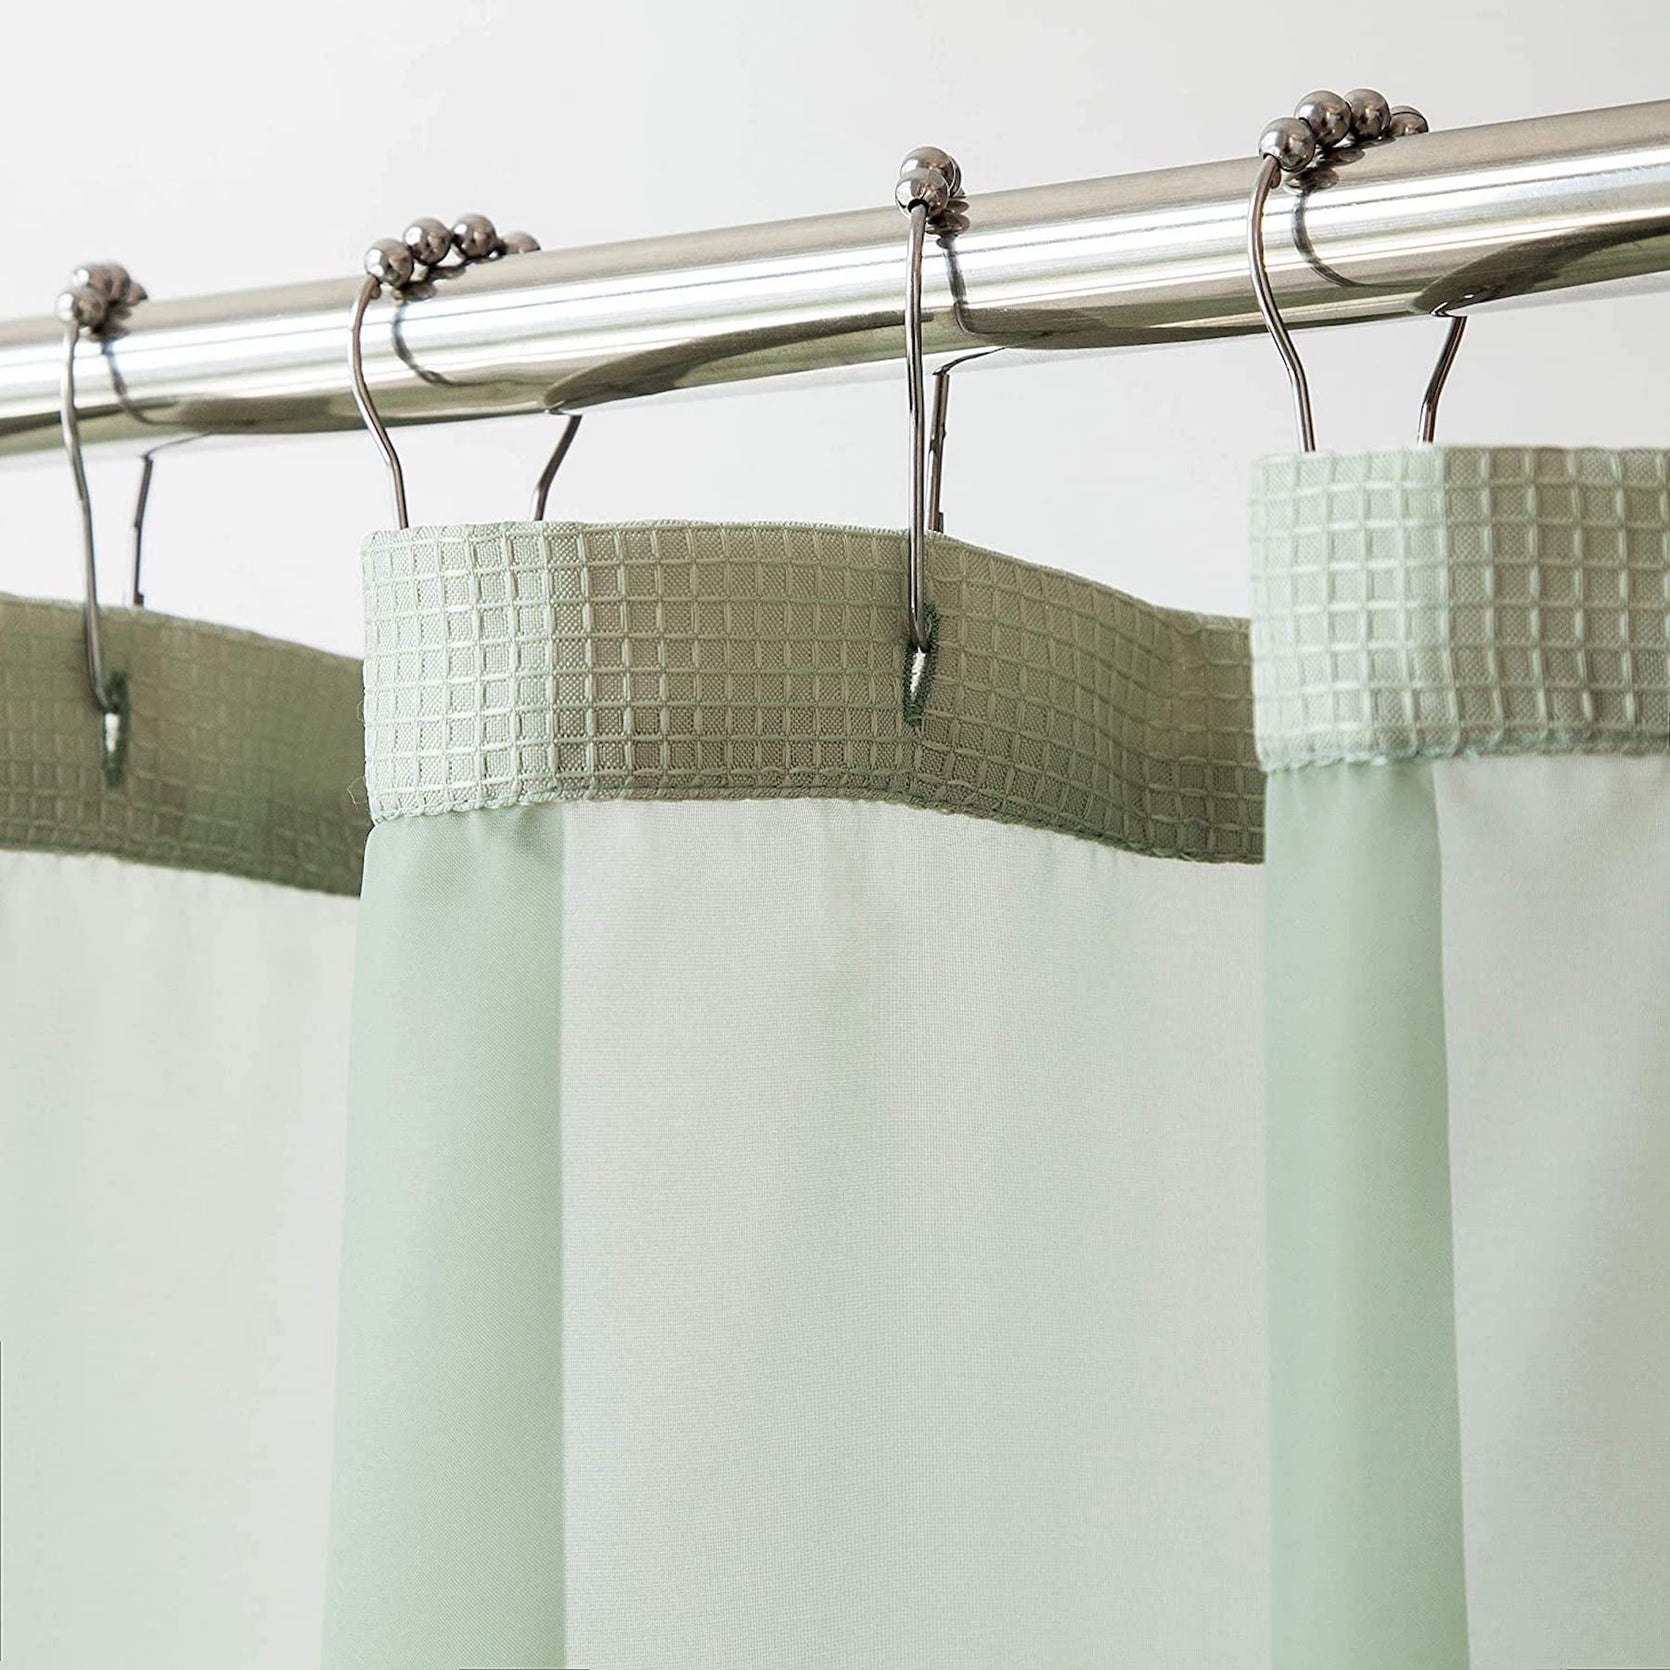 Towel hook for the shower curtain - Butlerhook